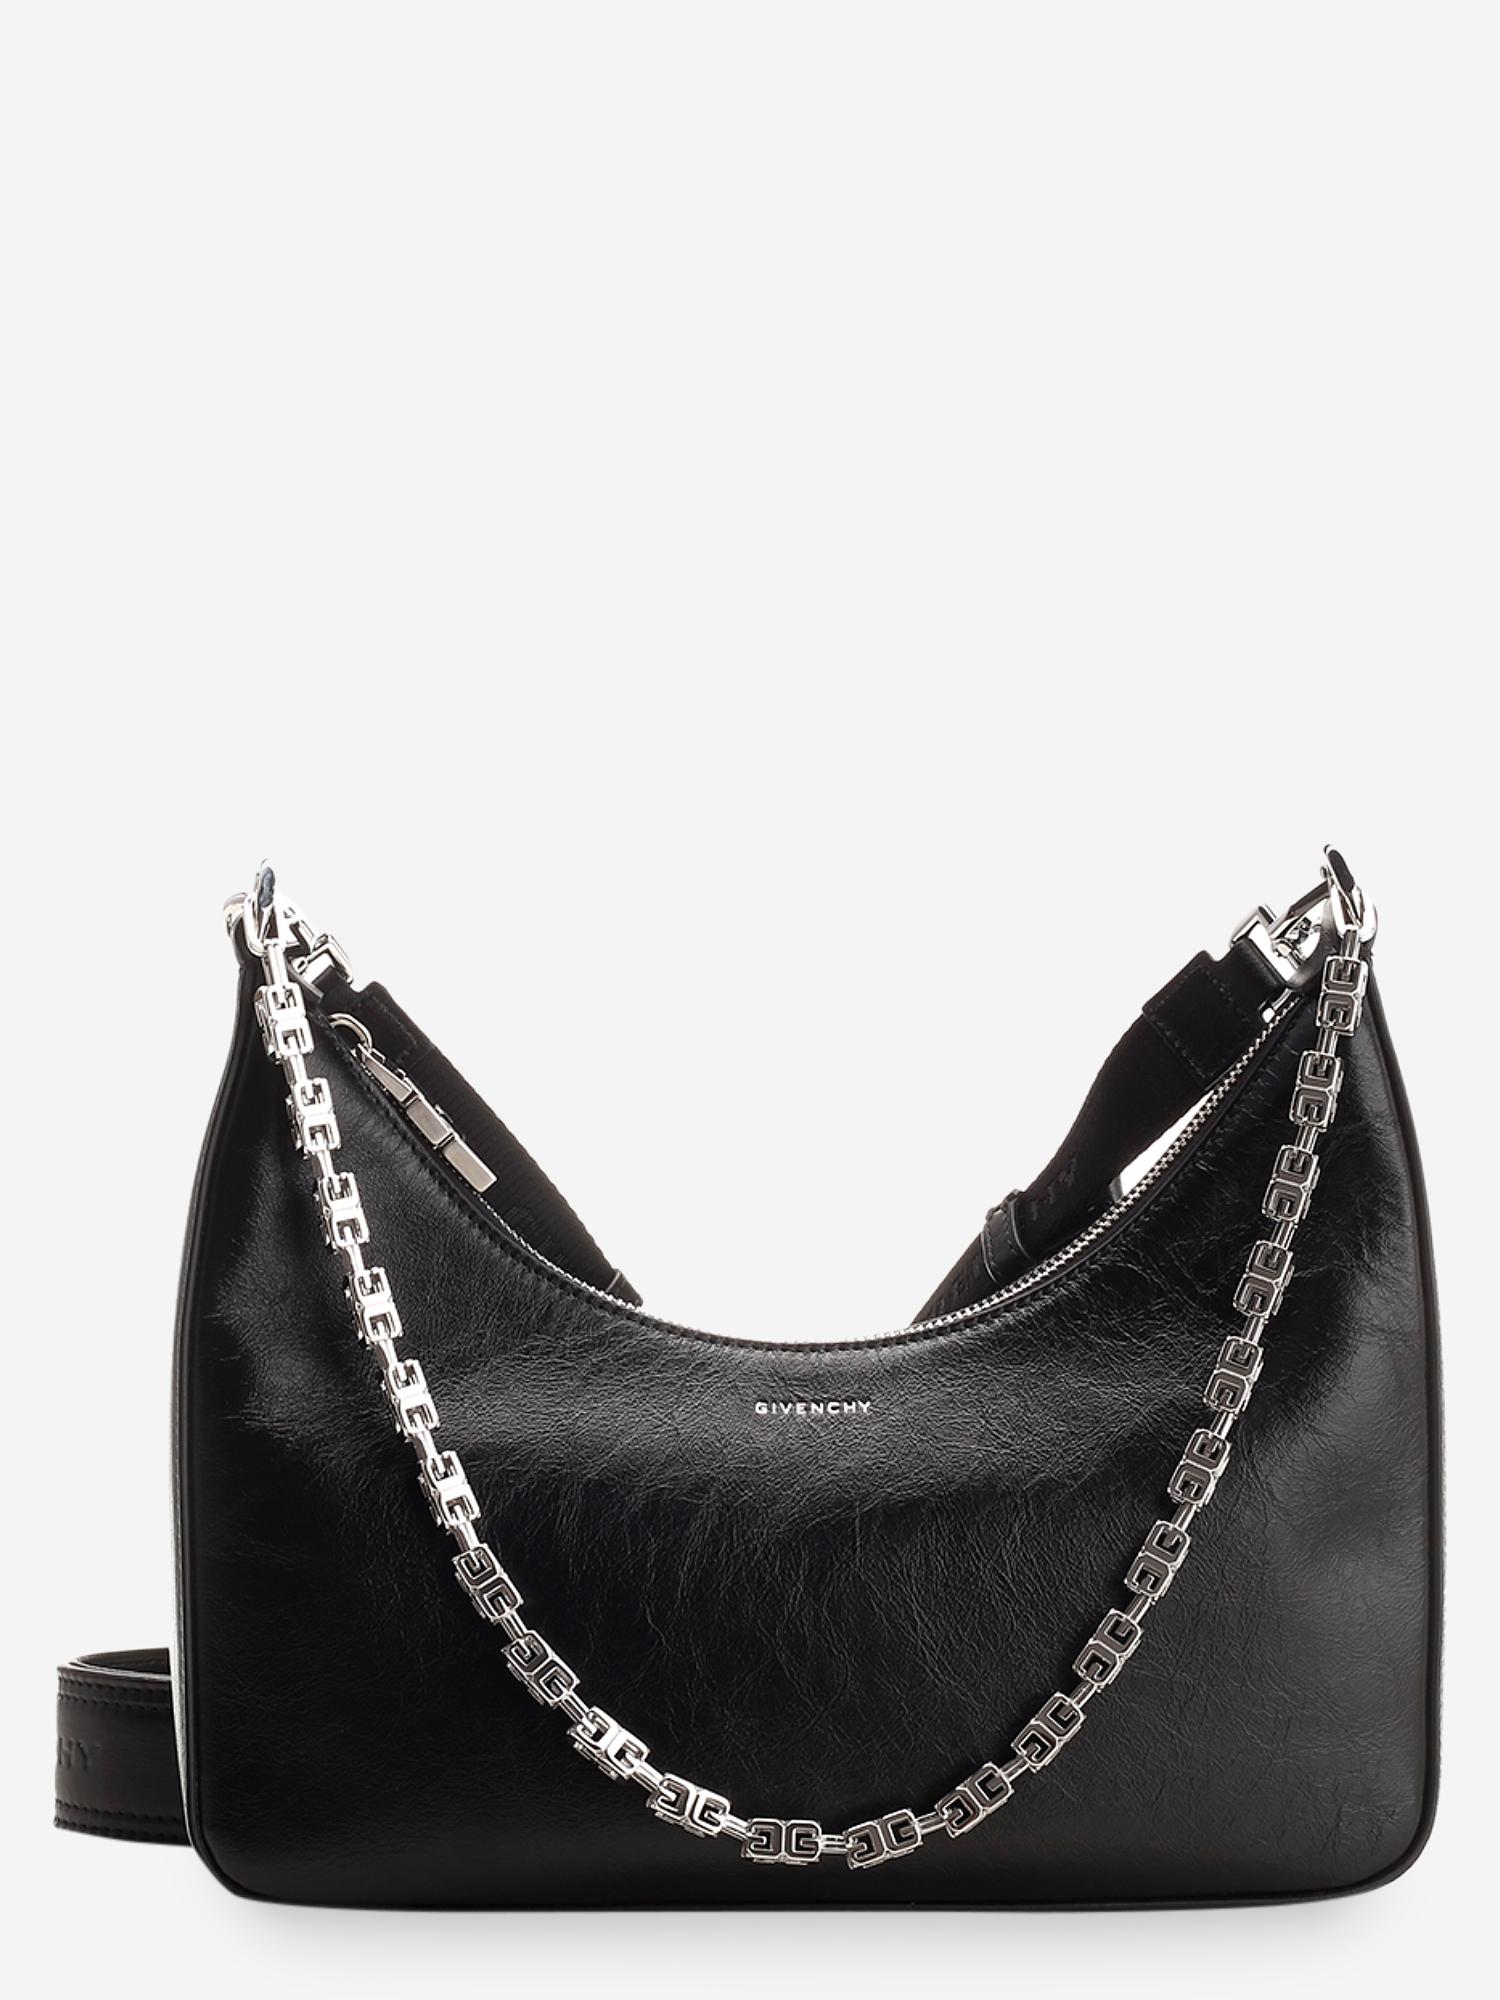 Givenchy Handbags - Lampoo